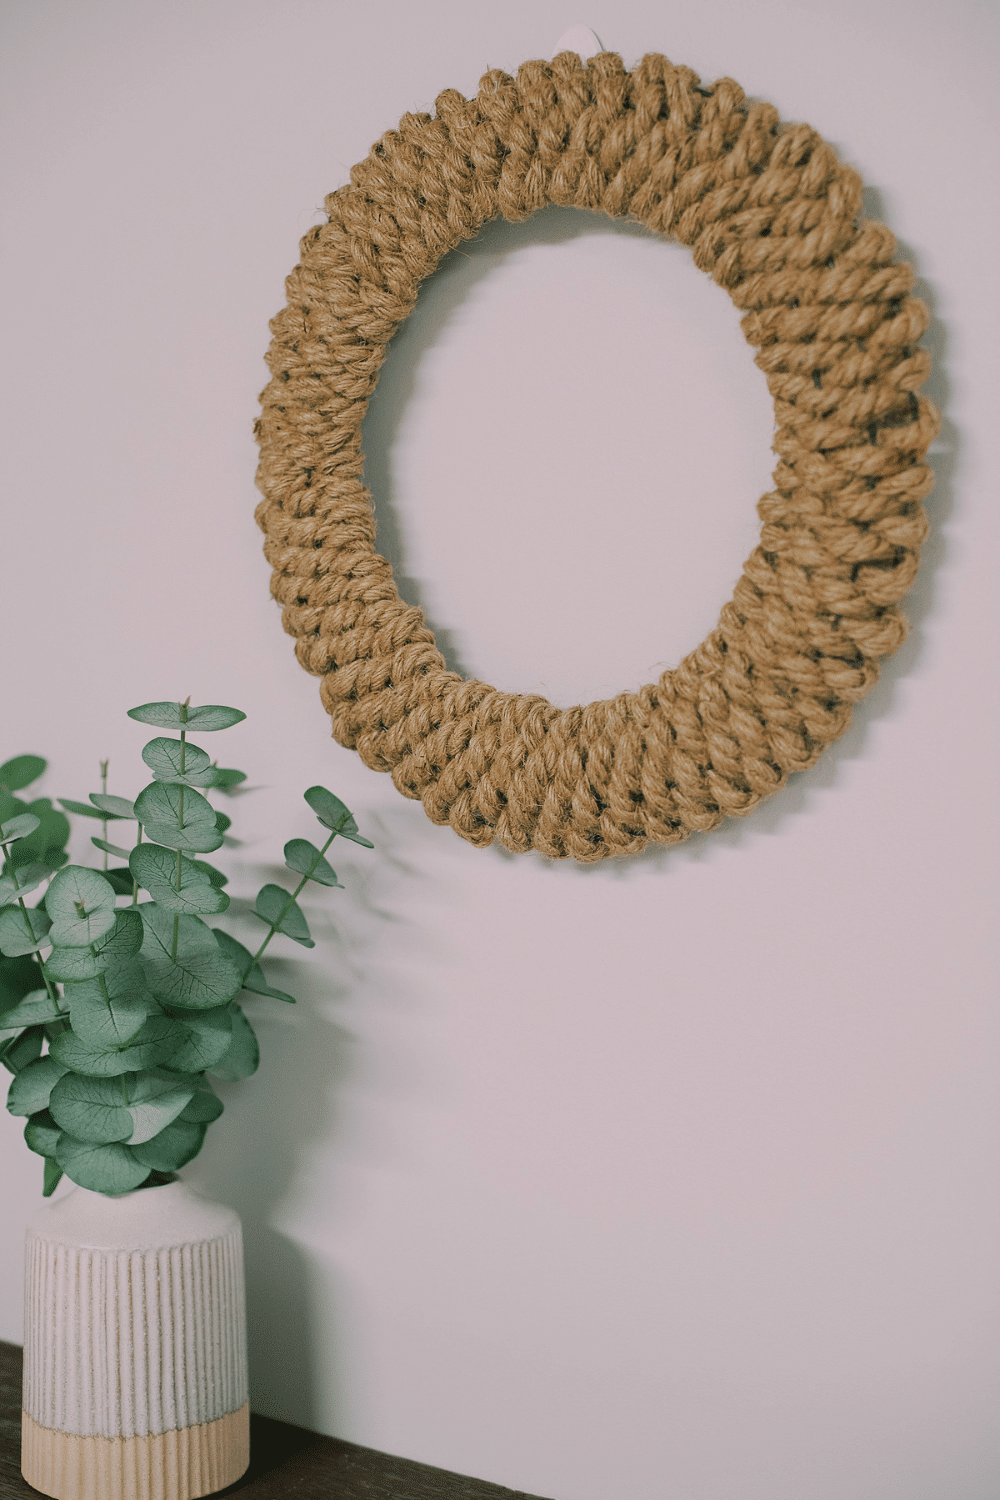 How to Make a Jute Wreath